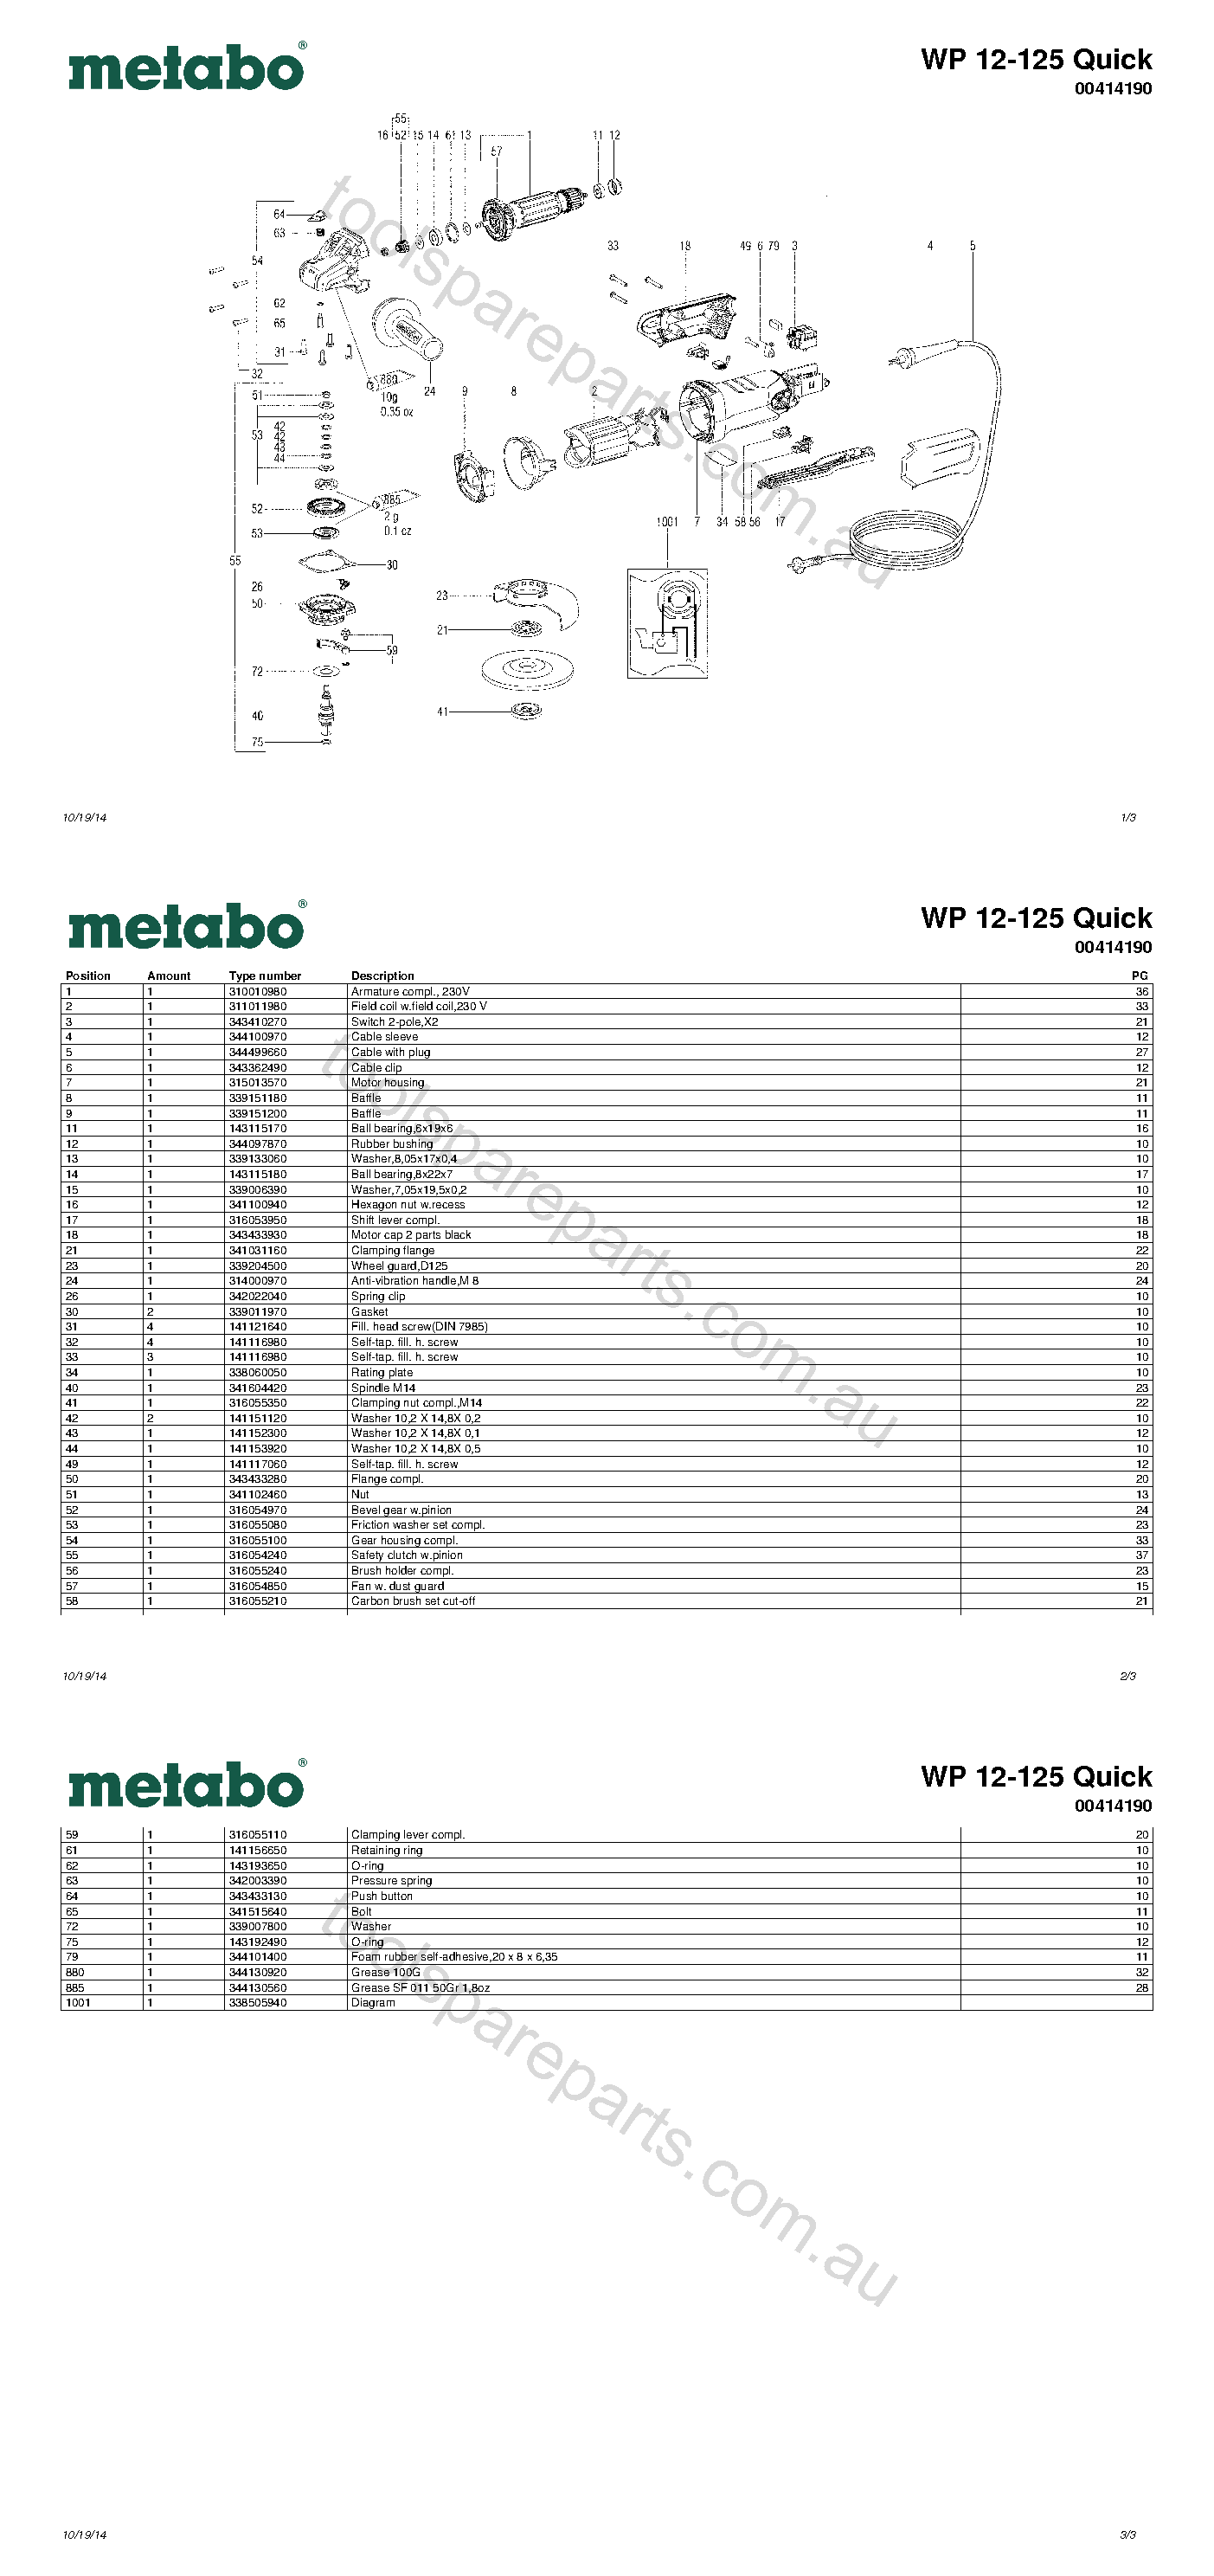 Metabo WP 12-125 Quick 00414190  Diagram 1